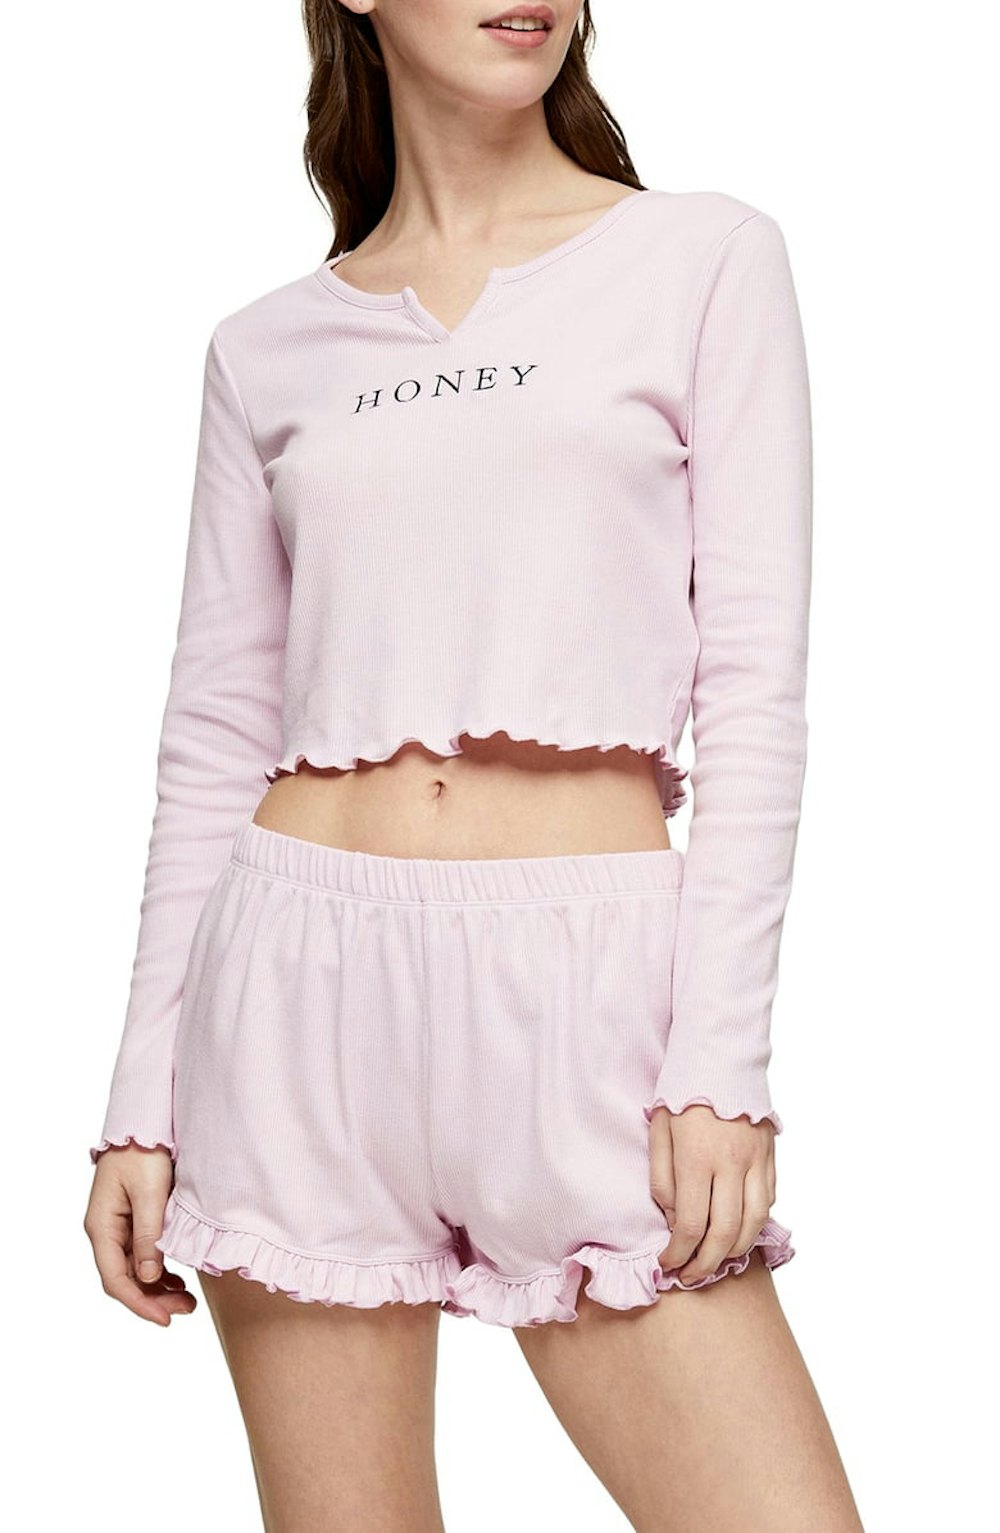 Honey Thermal Short Pajamas